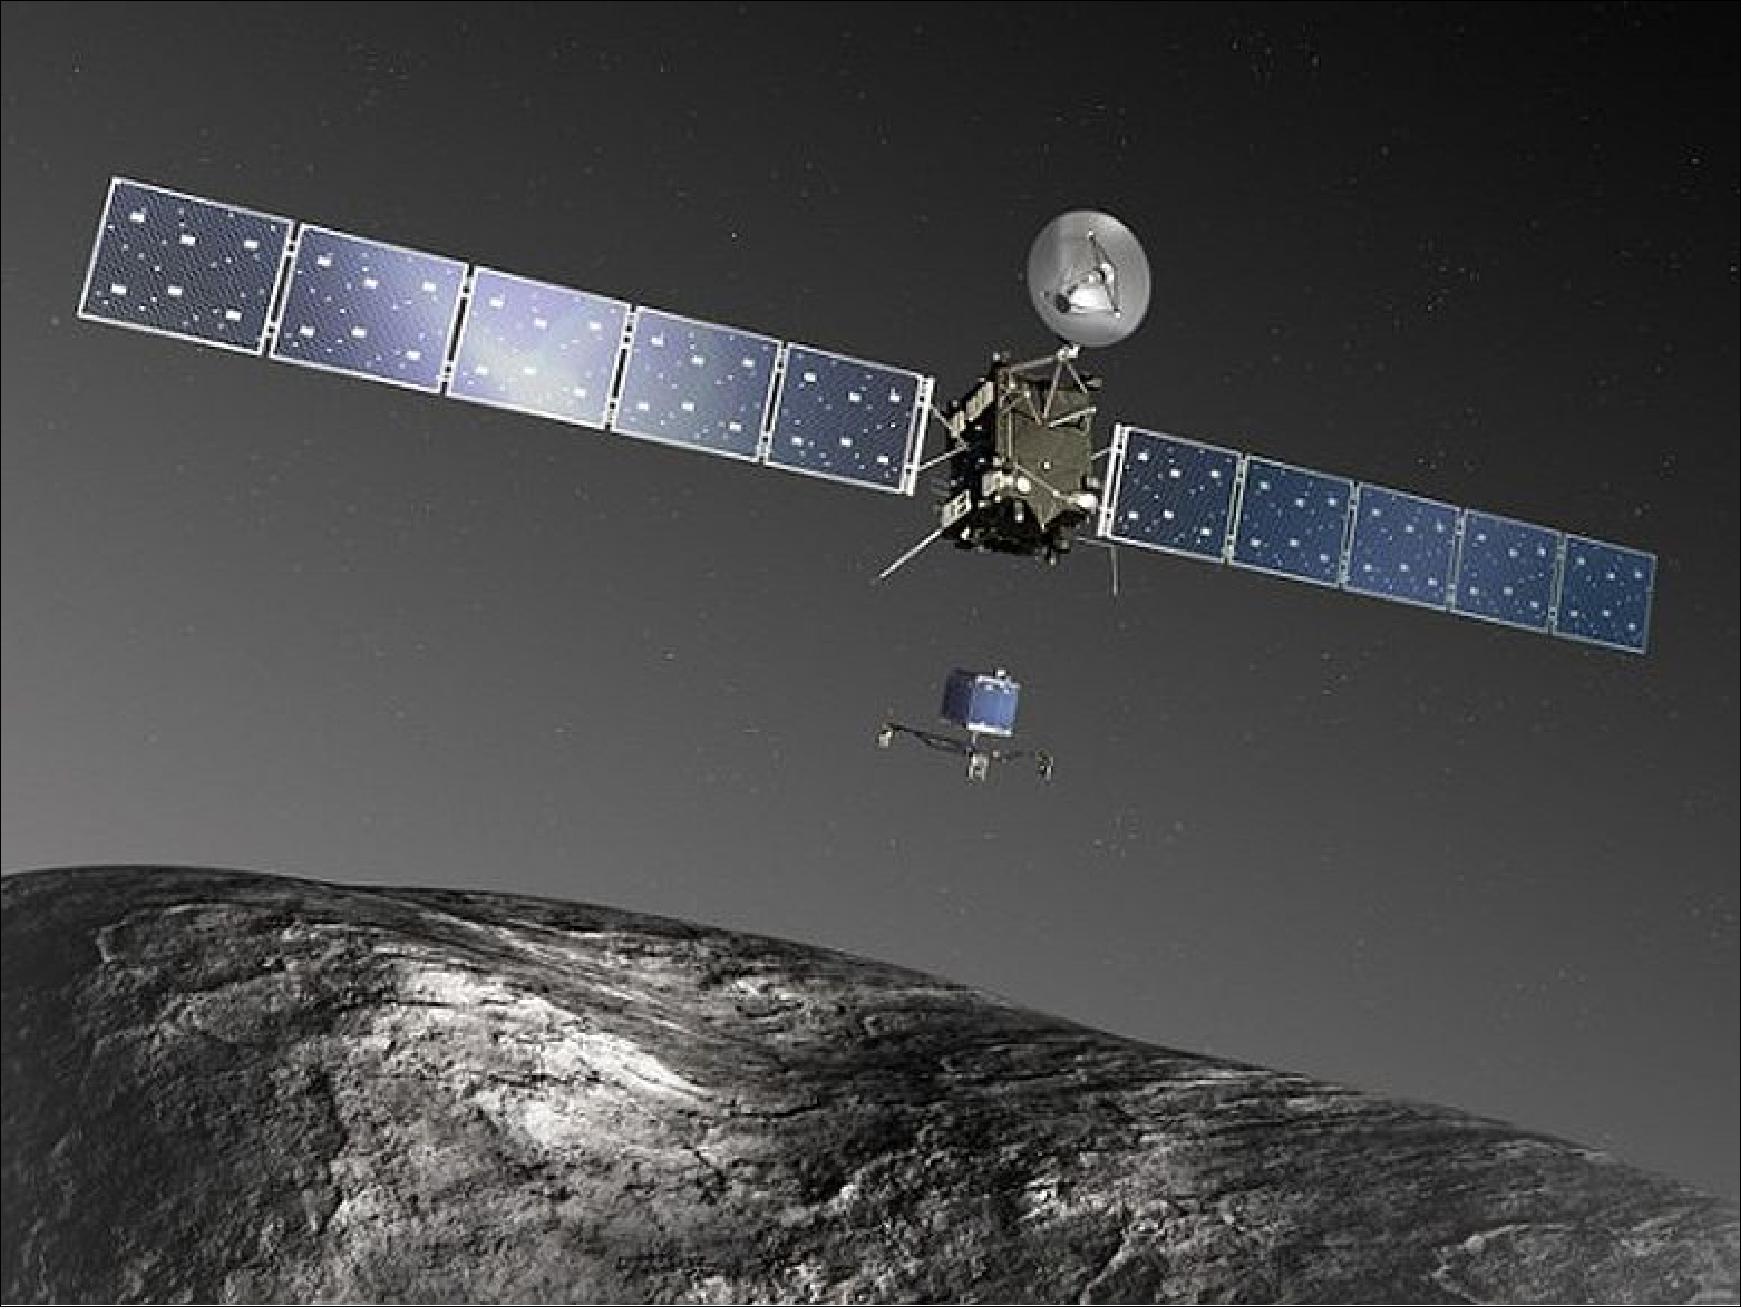 Figure 30: Artist’s impression (not to scale) of the Rosetta orbiter deploying the Philae lander to comet 67P/Churyumov–Gerasimenko (image credit: ESA, C. Carreau, ATG medialab) 69)